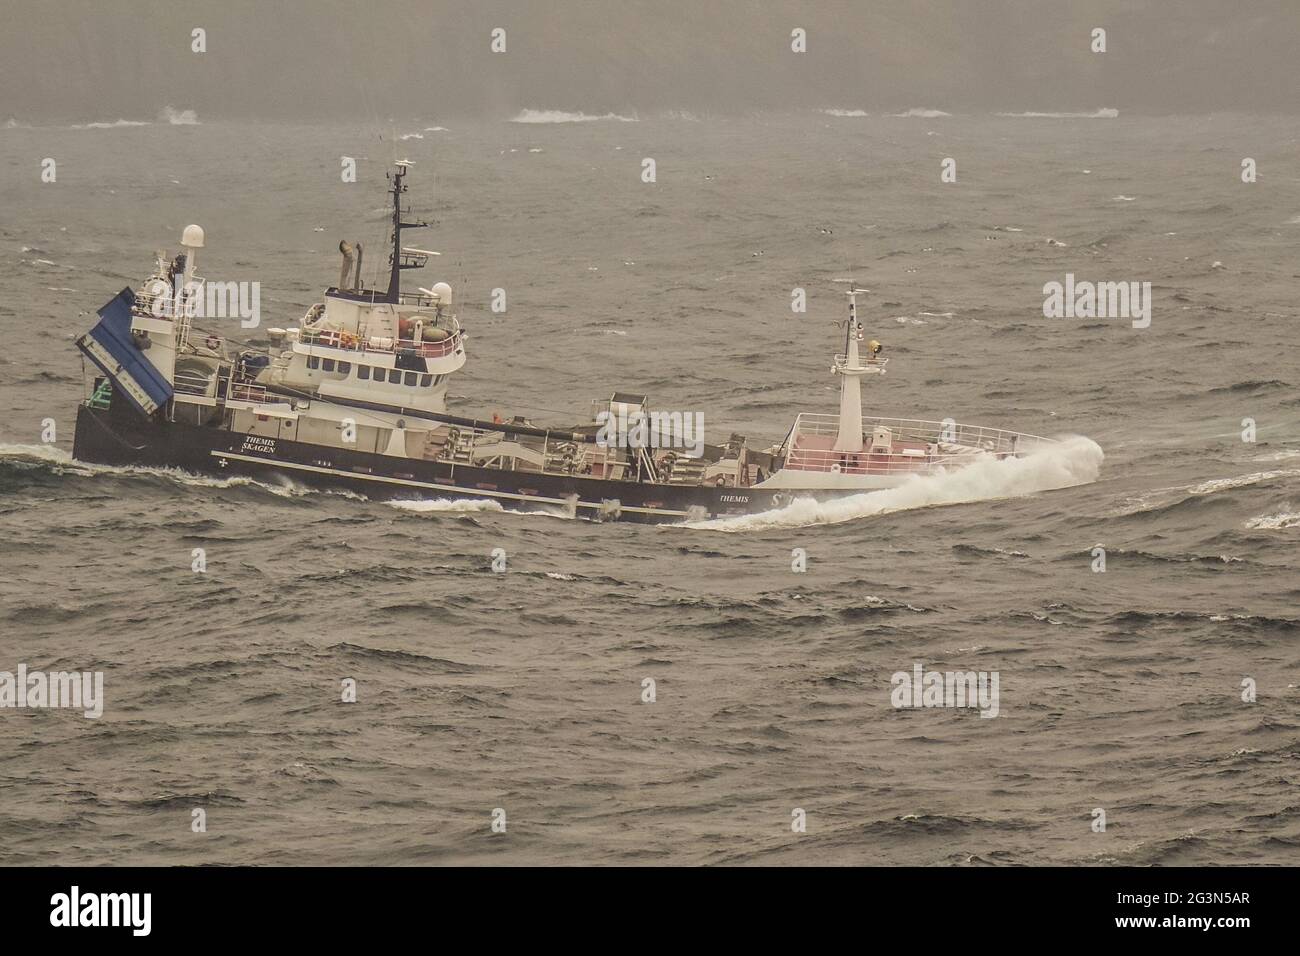 Fishing Trawler in heavy seas Stock Photo